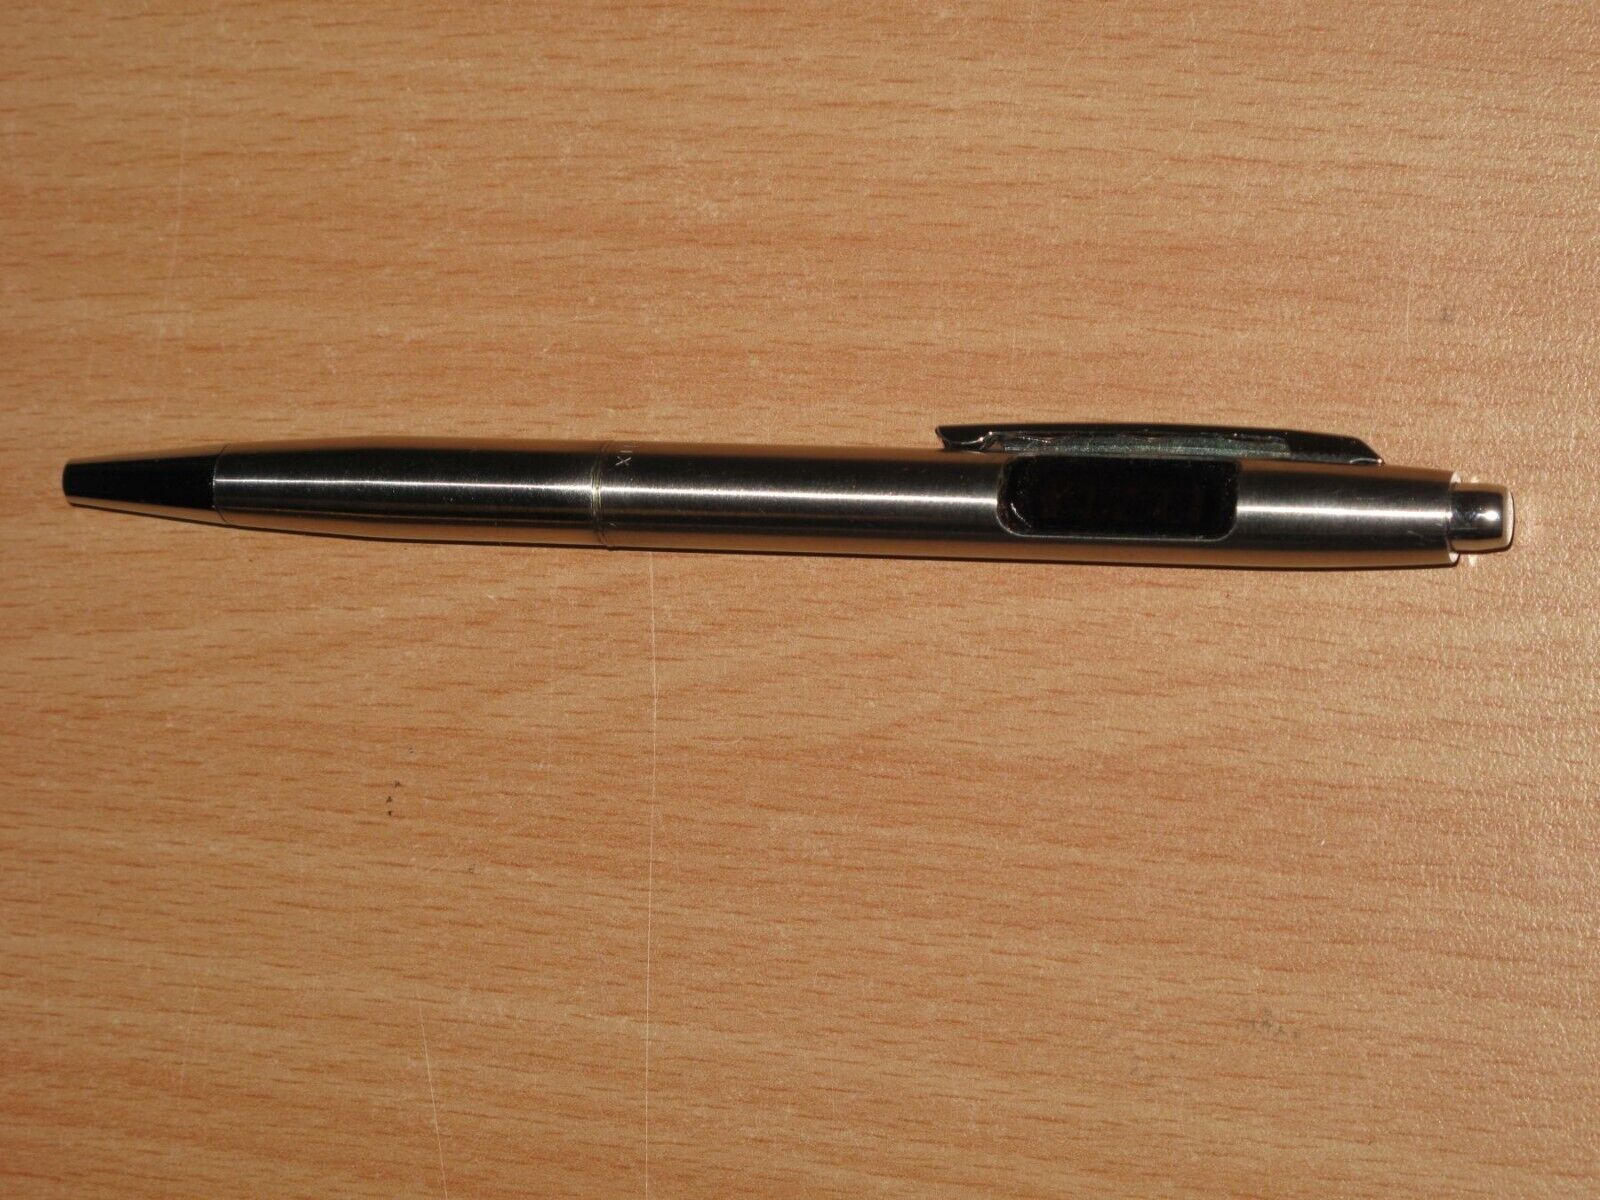 NEUTRONIX LED Watch Ballpoint Pen Pin Pen 70er Years Vintage Defective